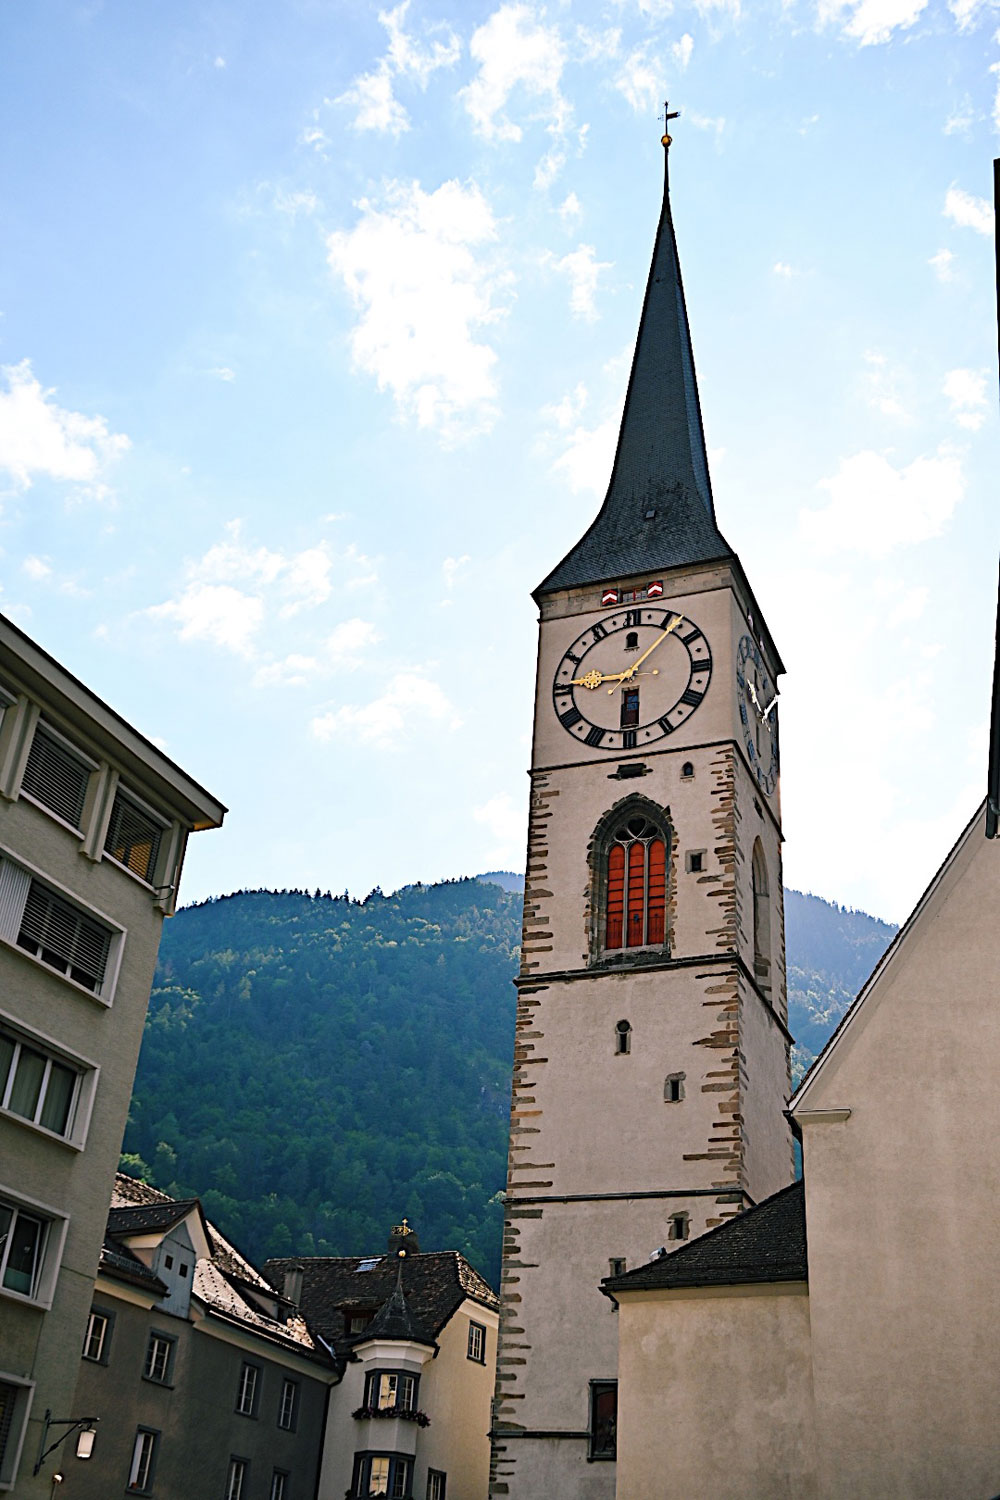 Sonrisa-x-NaturellyMichaela-x-Chur-Martinskirche2 Tour de Suisse: Chur - Welcome to my hometown!